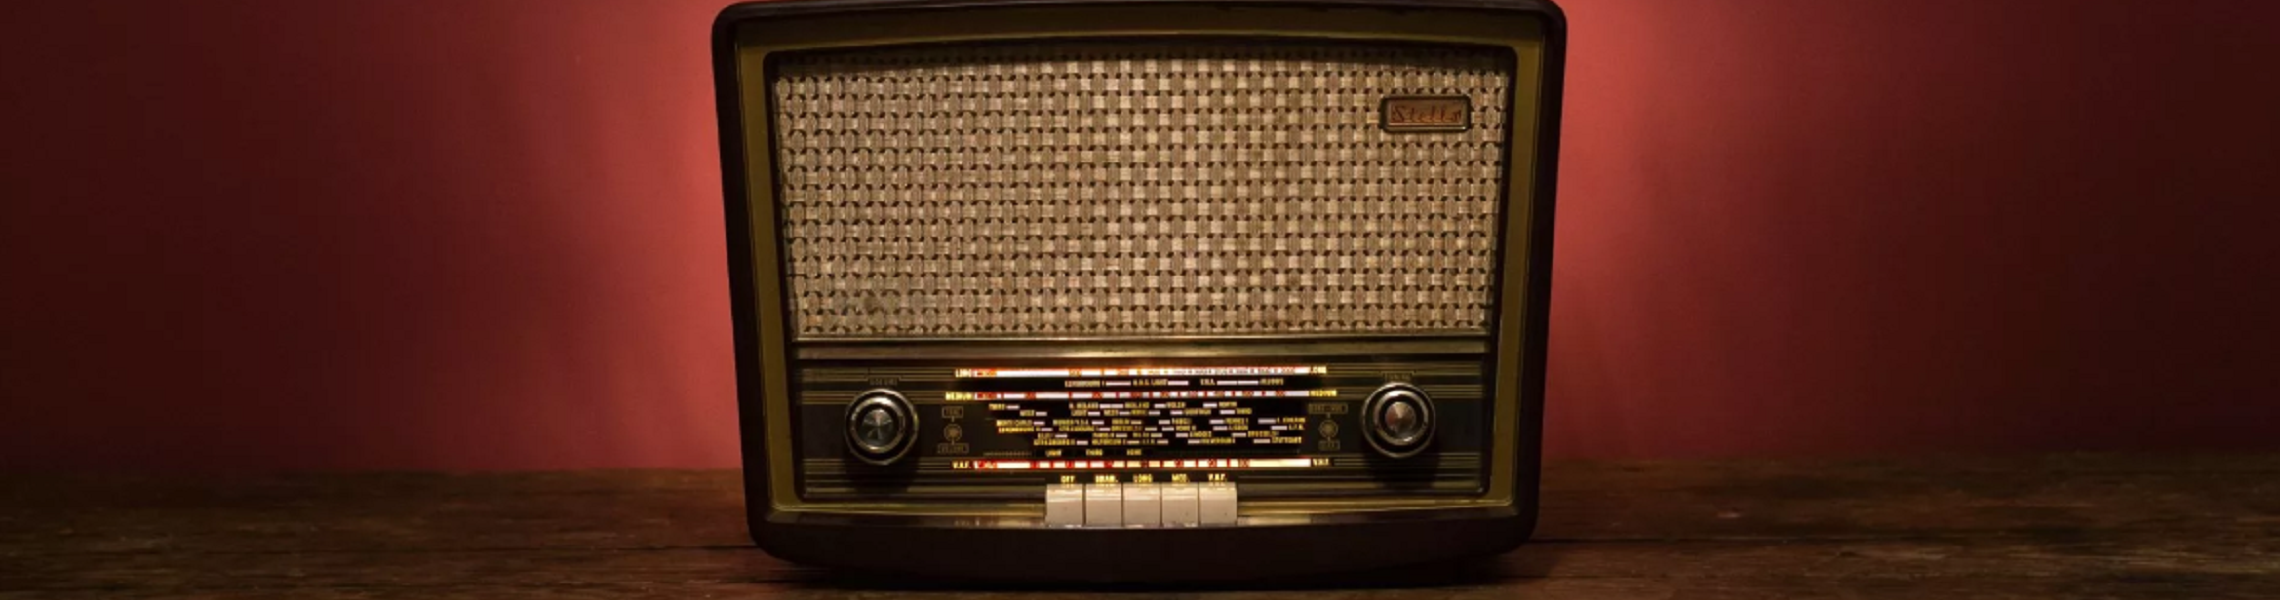 Радио звучание. Радиоприемник электроник. Звук радиоприемника. Первые радио. Радио звук.